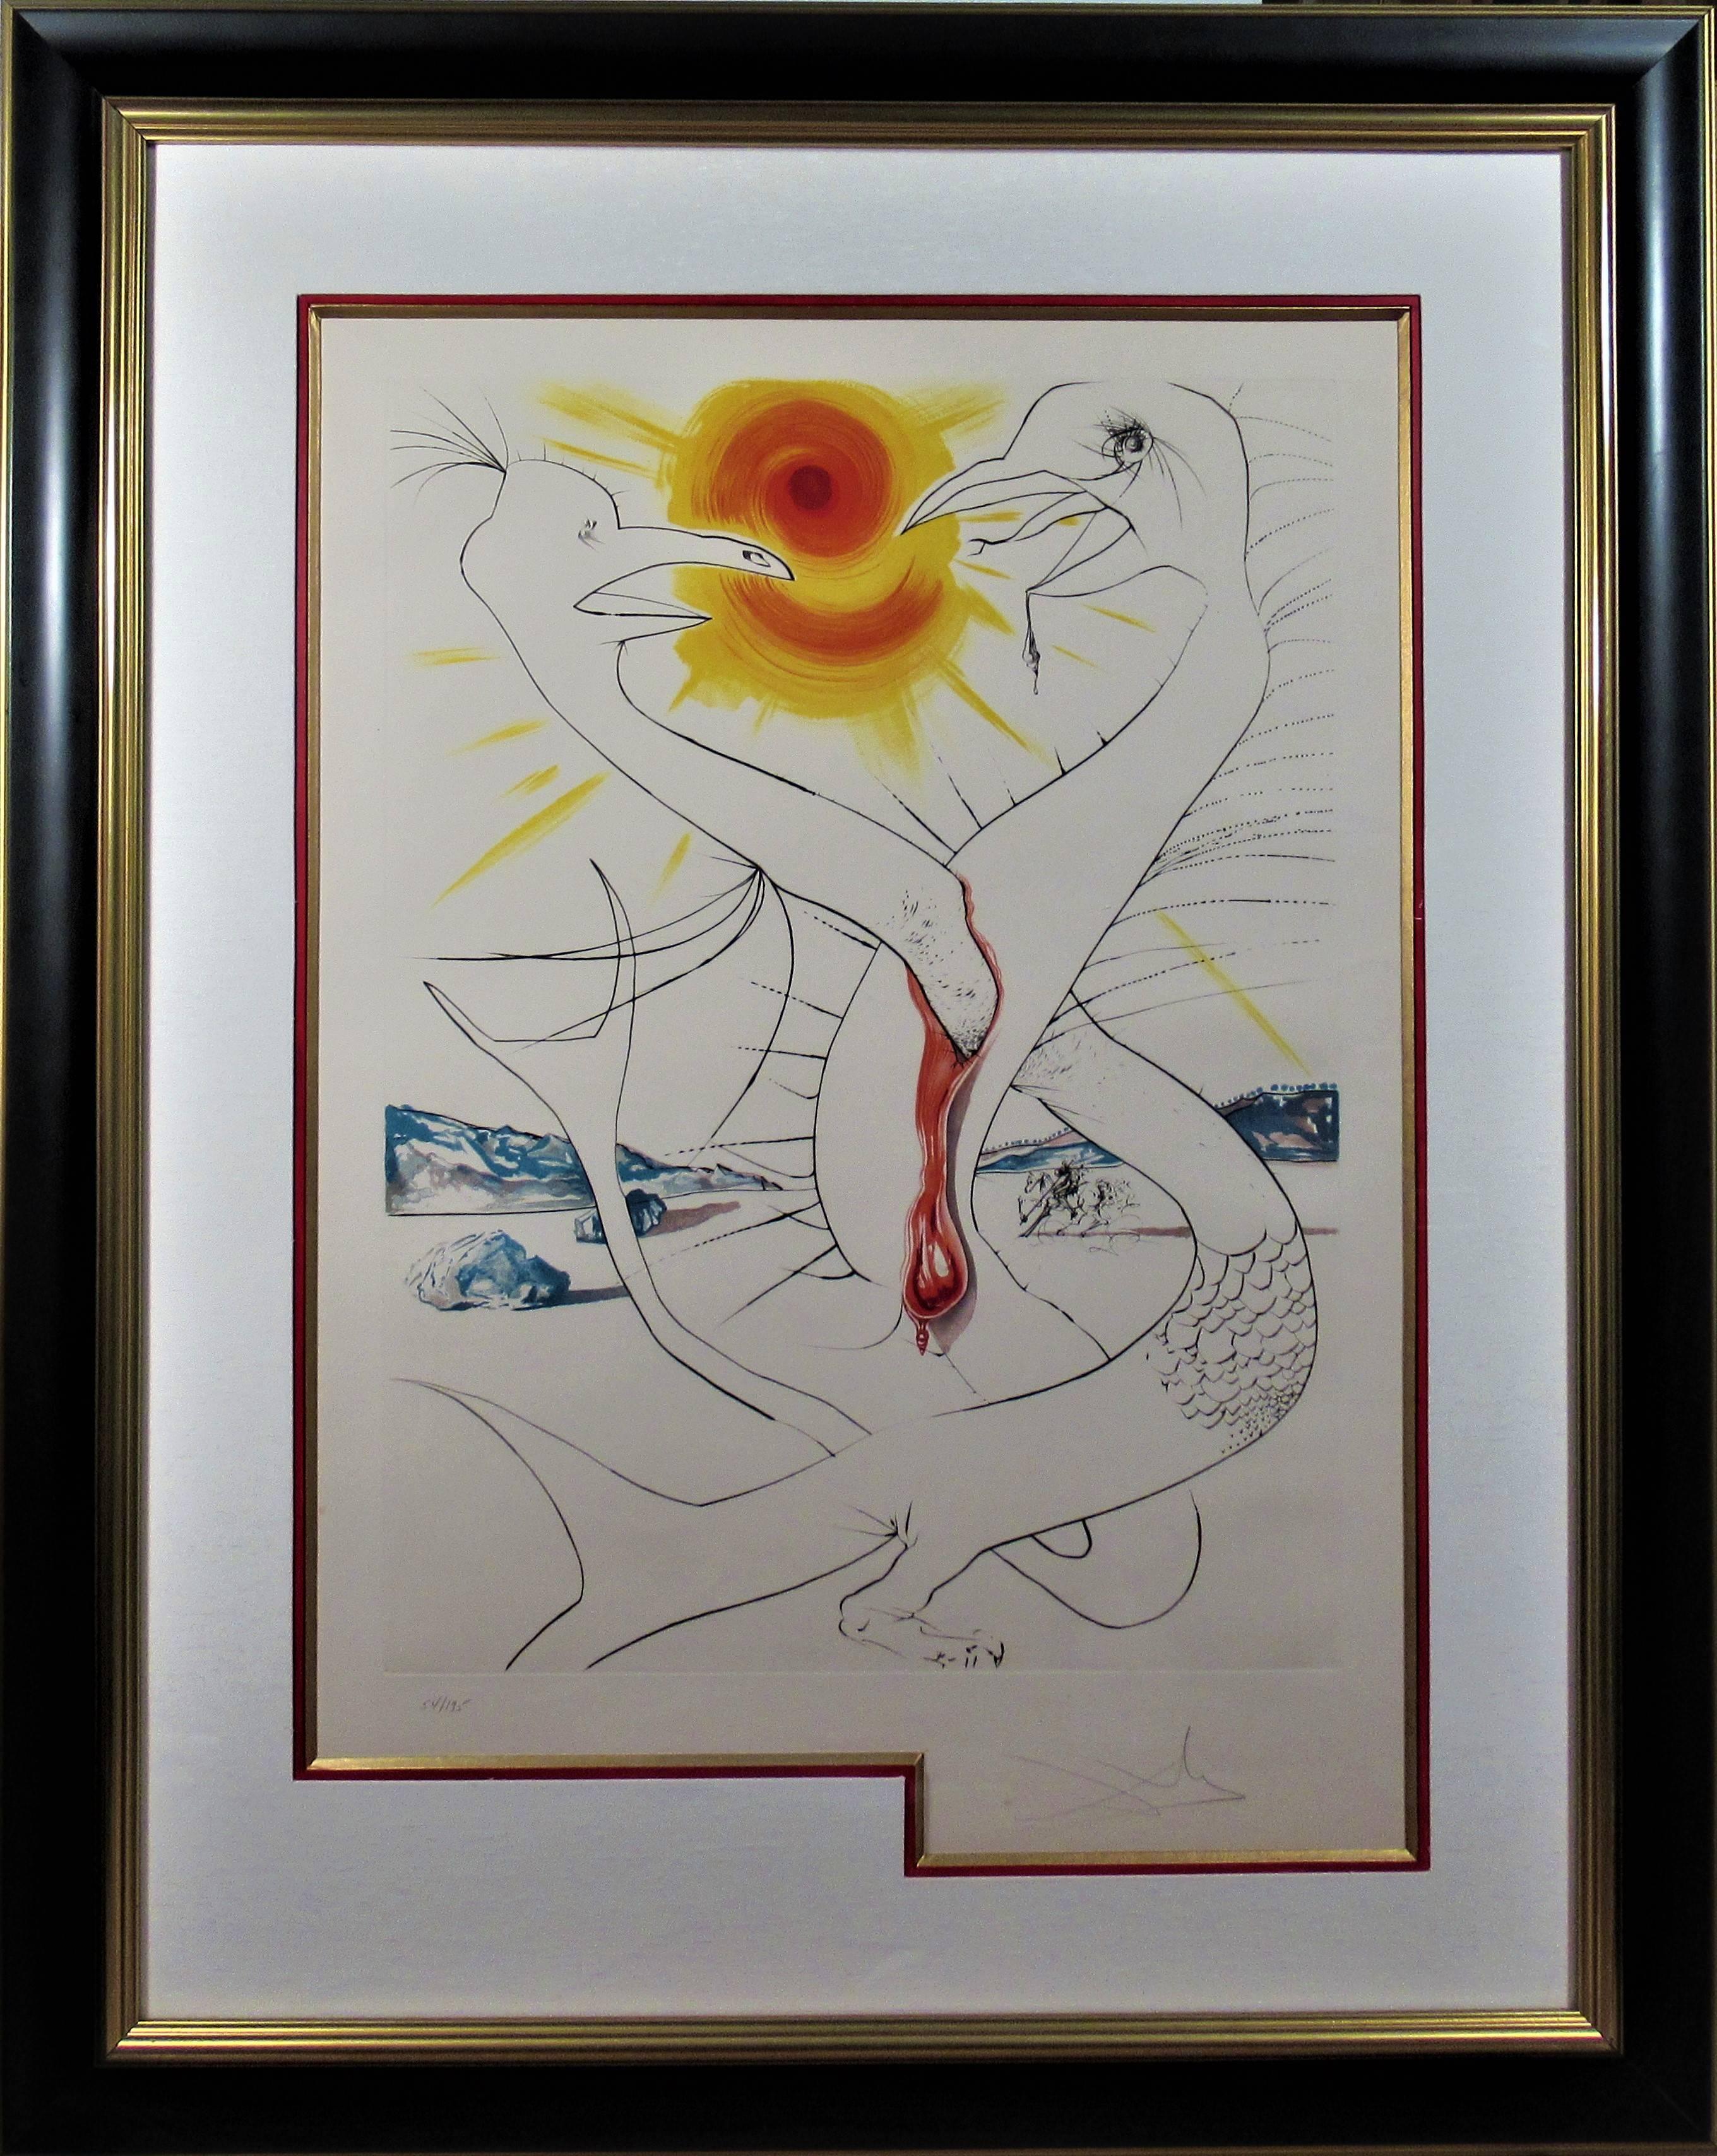 Salvador Dalí Abstract Print - Le Caducee de Mars Alimente par la Boule de feu de Jupiter